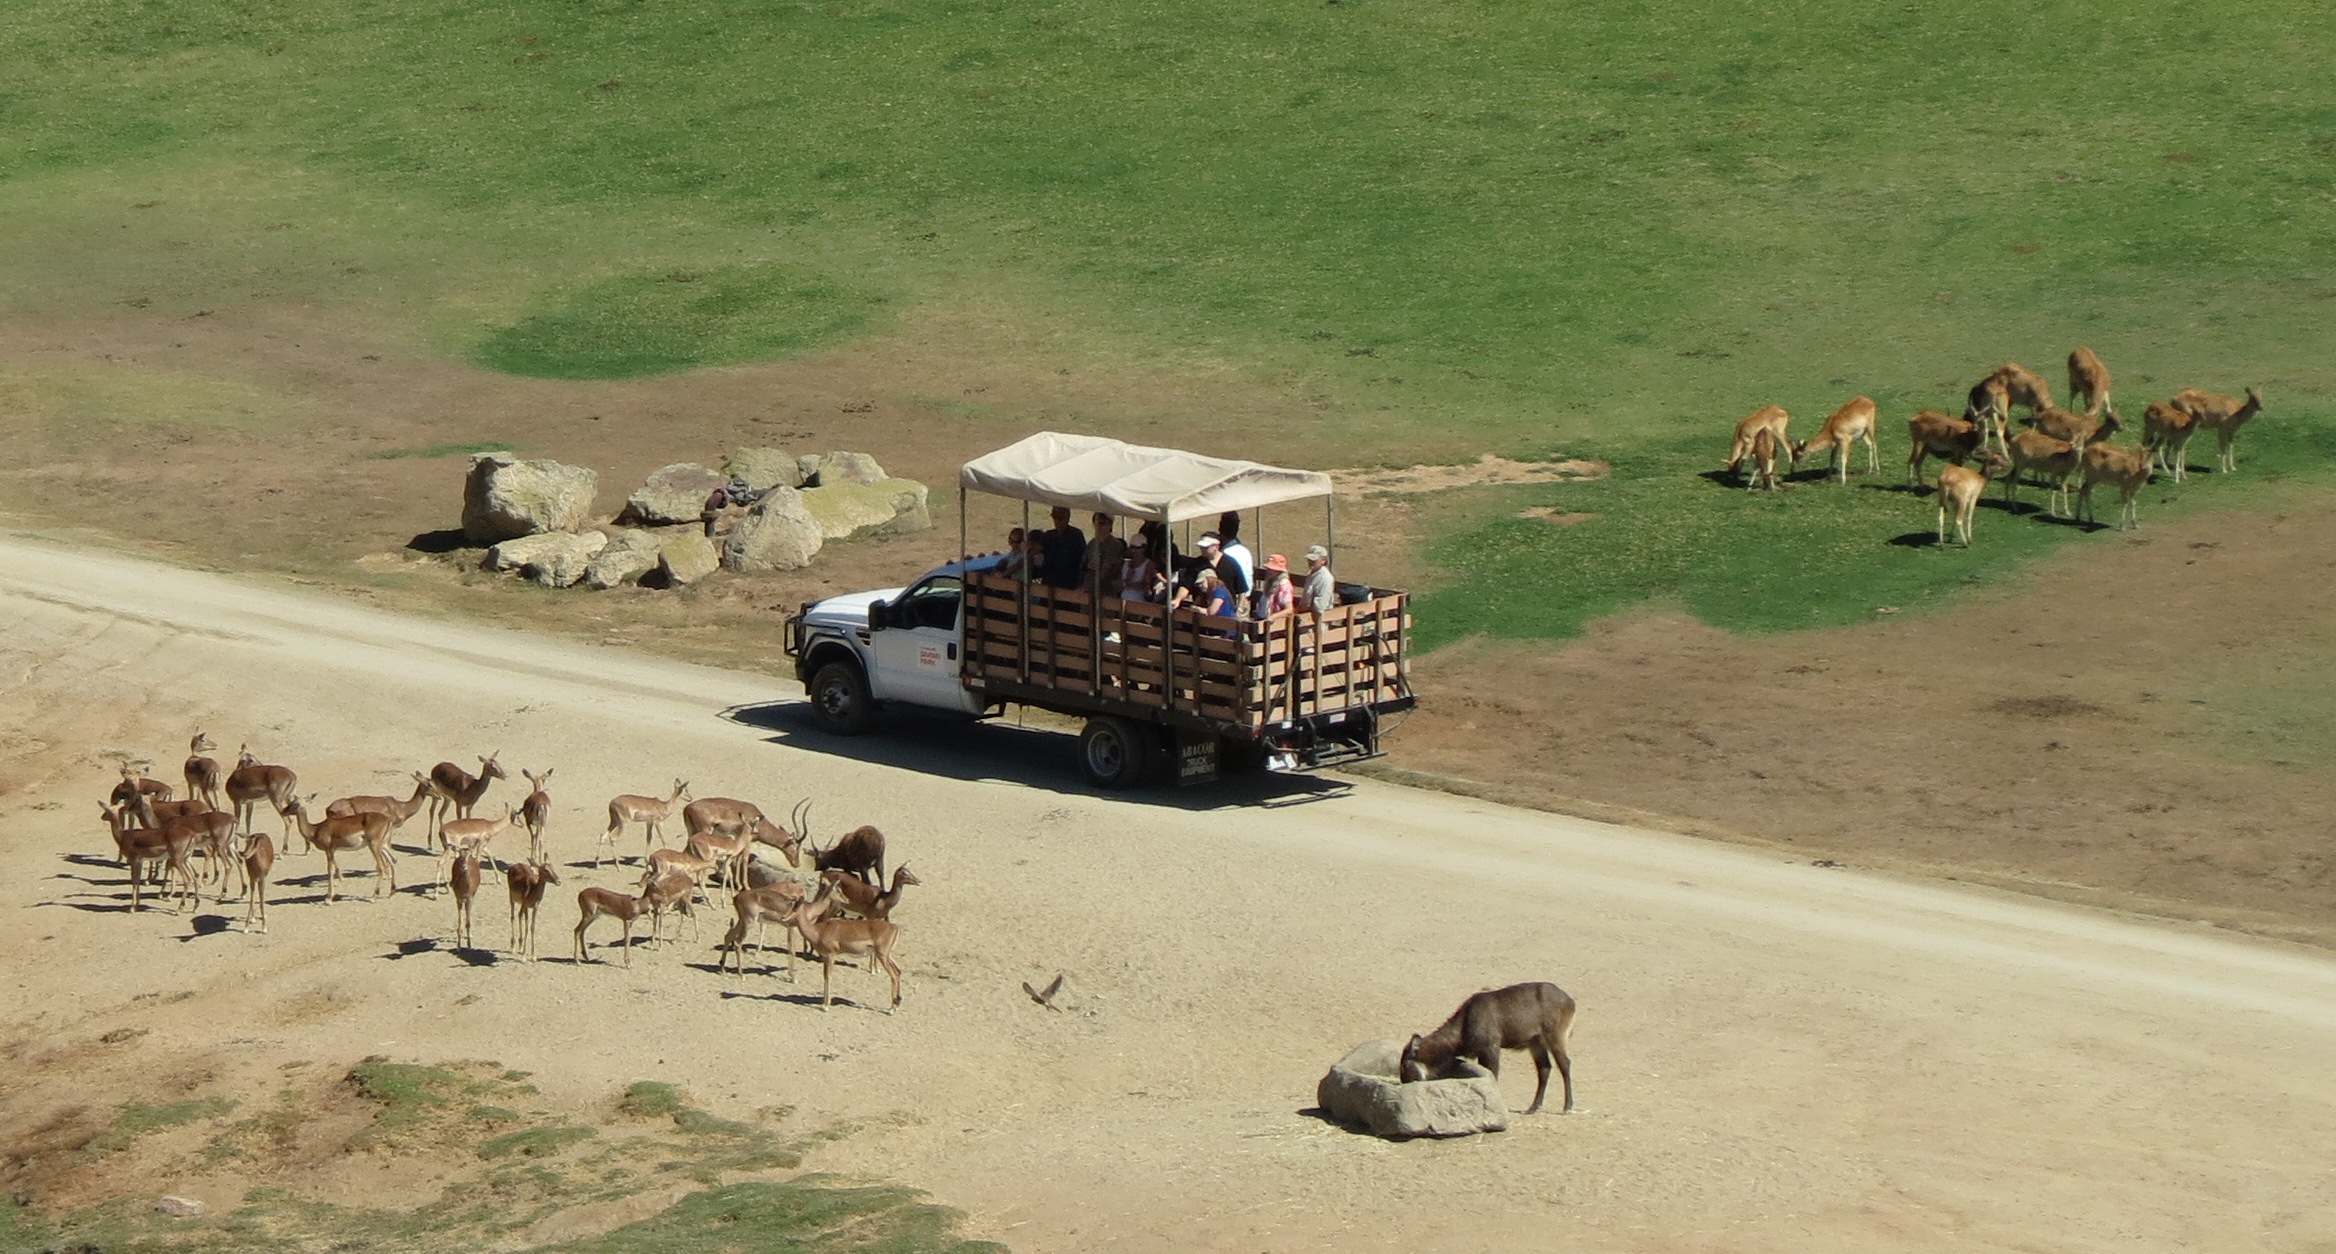 safari park near san diego